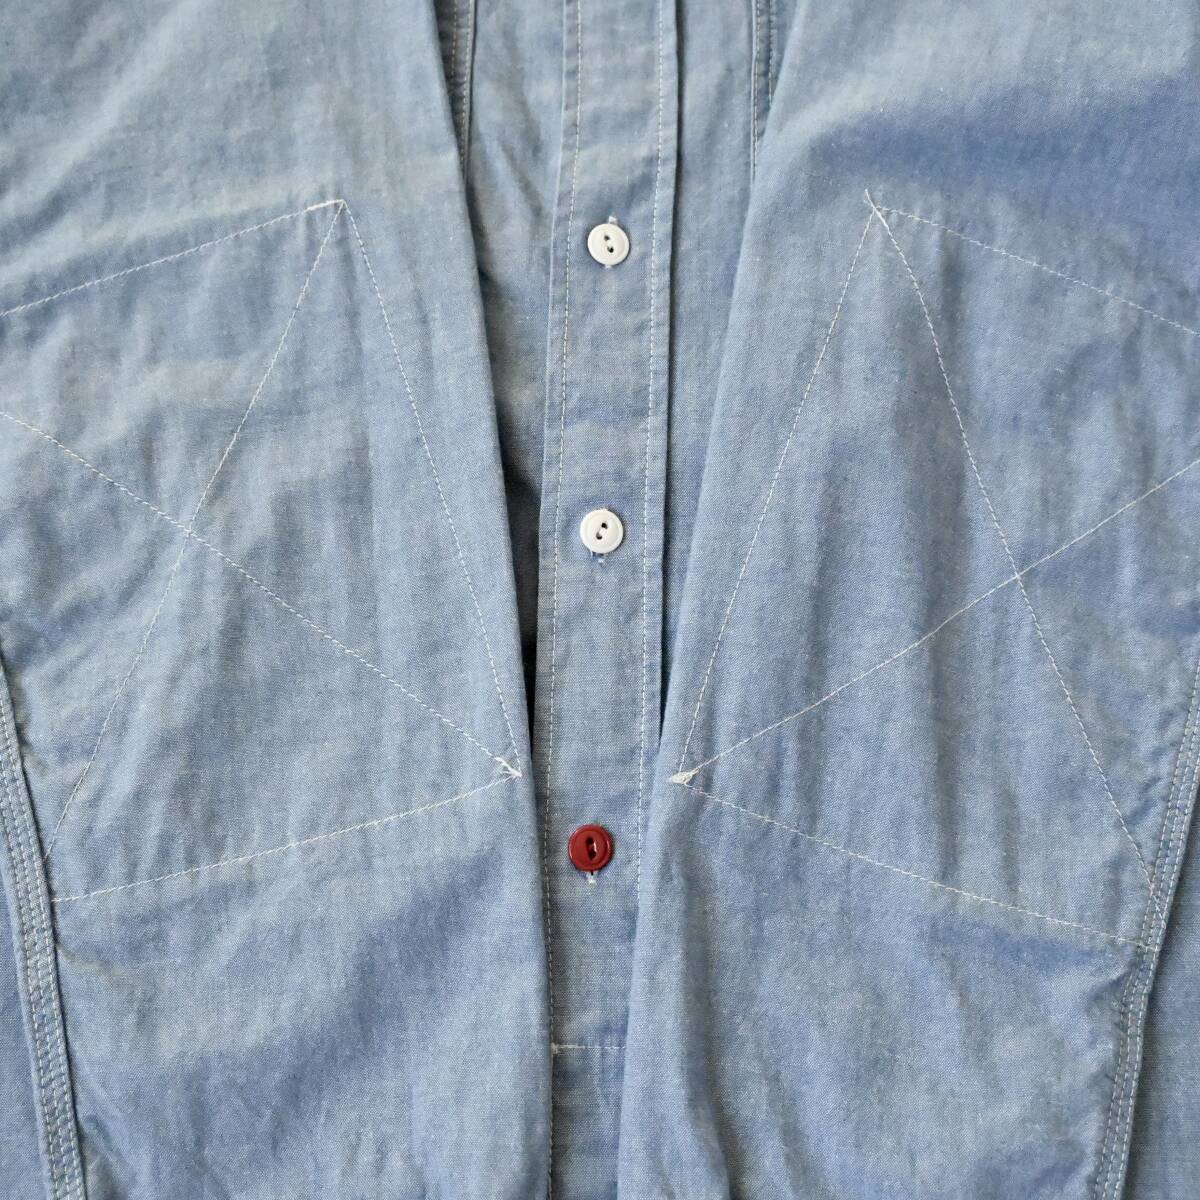  хорошая вещь [ Old Engineered Garments хлопок автомобиль n пятно - не на . карман рубашка work shirt надпись M USA производства ] Vintage 2000\'s старый бирка 